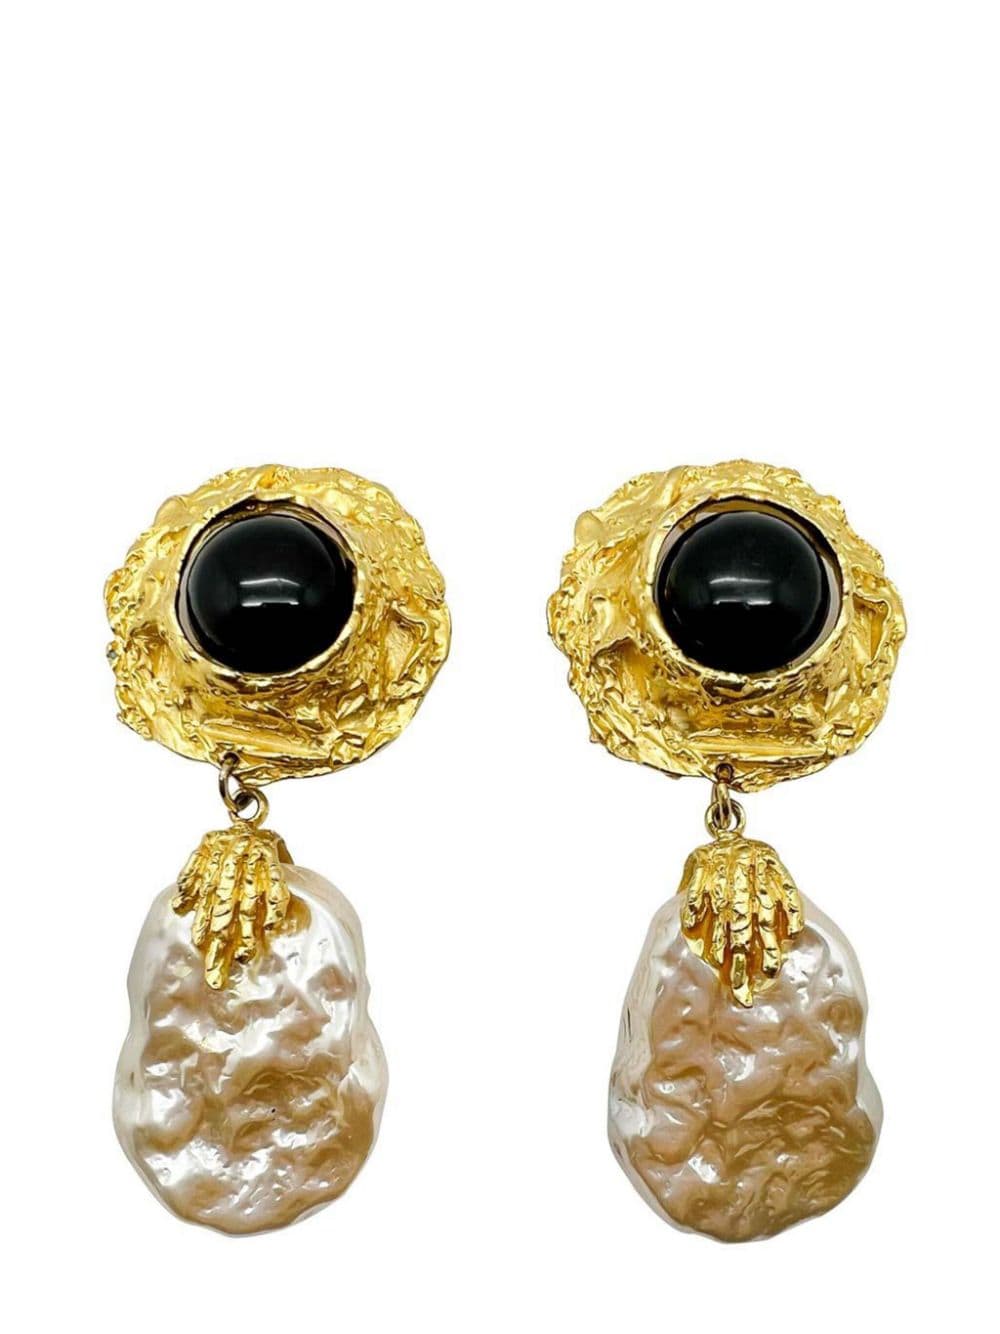 Jennifer Gibson Jewellery Vintage Craft Black Cabochon & Pearl Statement Earrings 1980s - Gold von Jennifer Gibson Jewellery